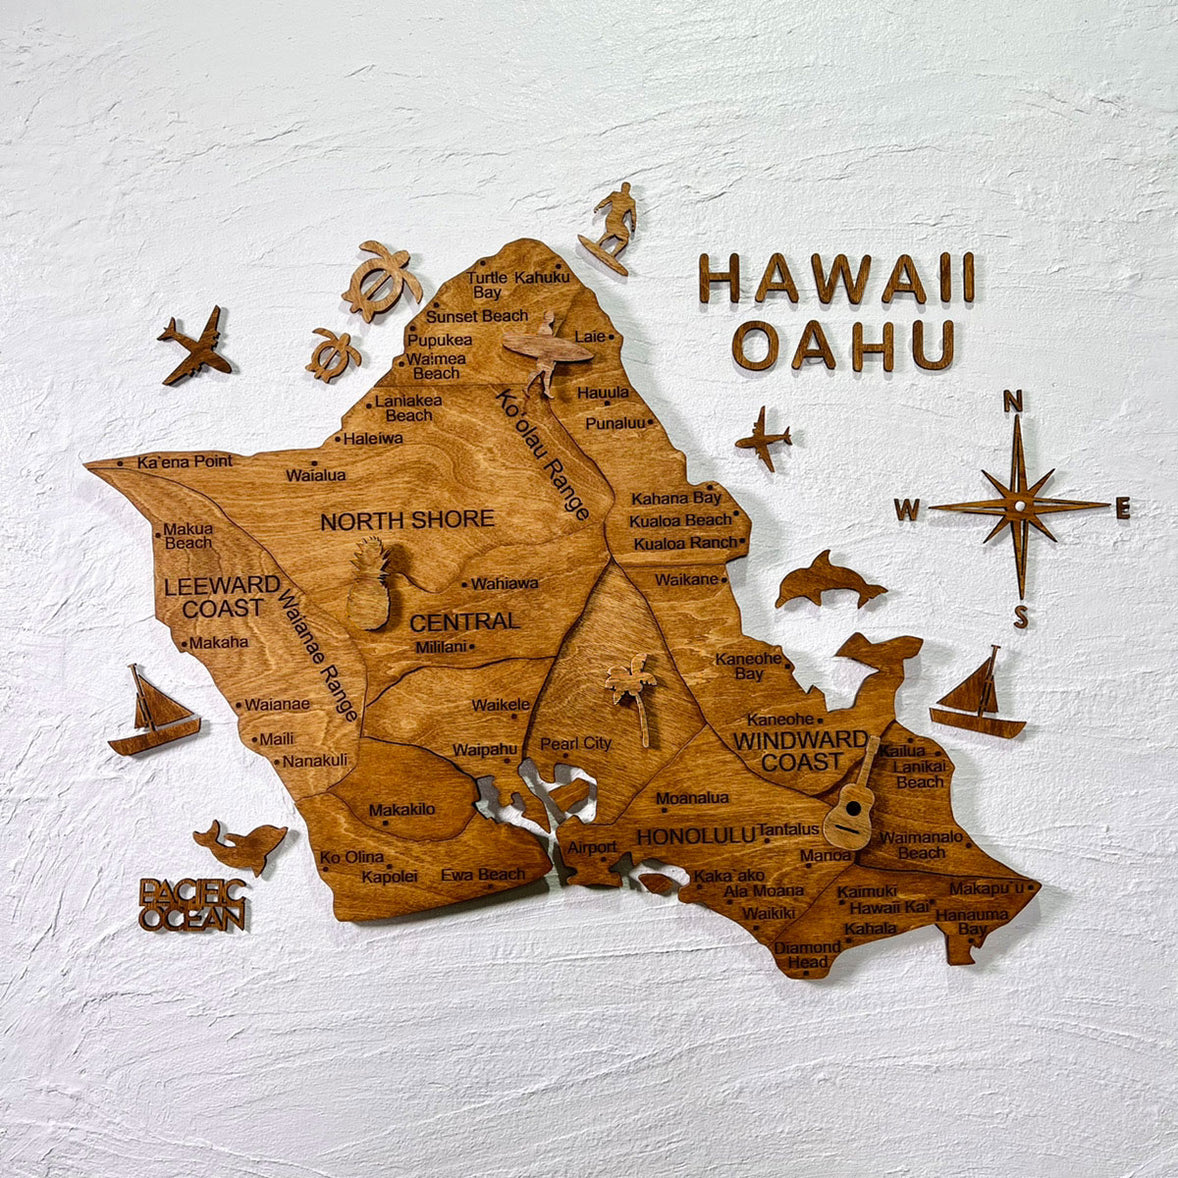 3D Wood Hawaii Oahu Map 壁掛け木製ハワイ地図【翌日出荷】 – Enjoy 